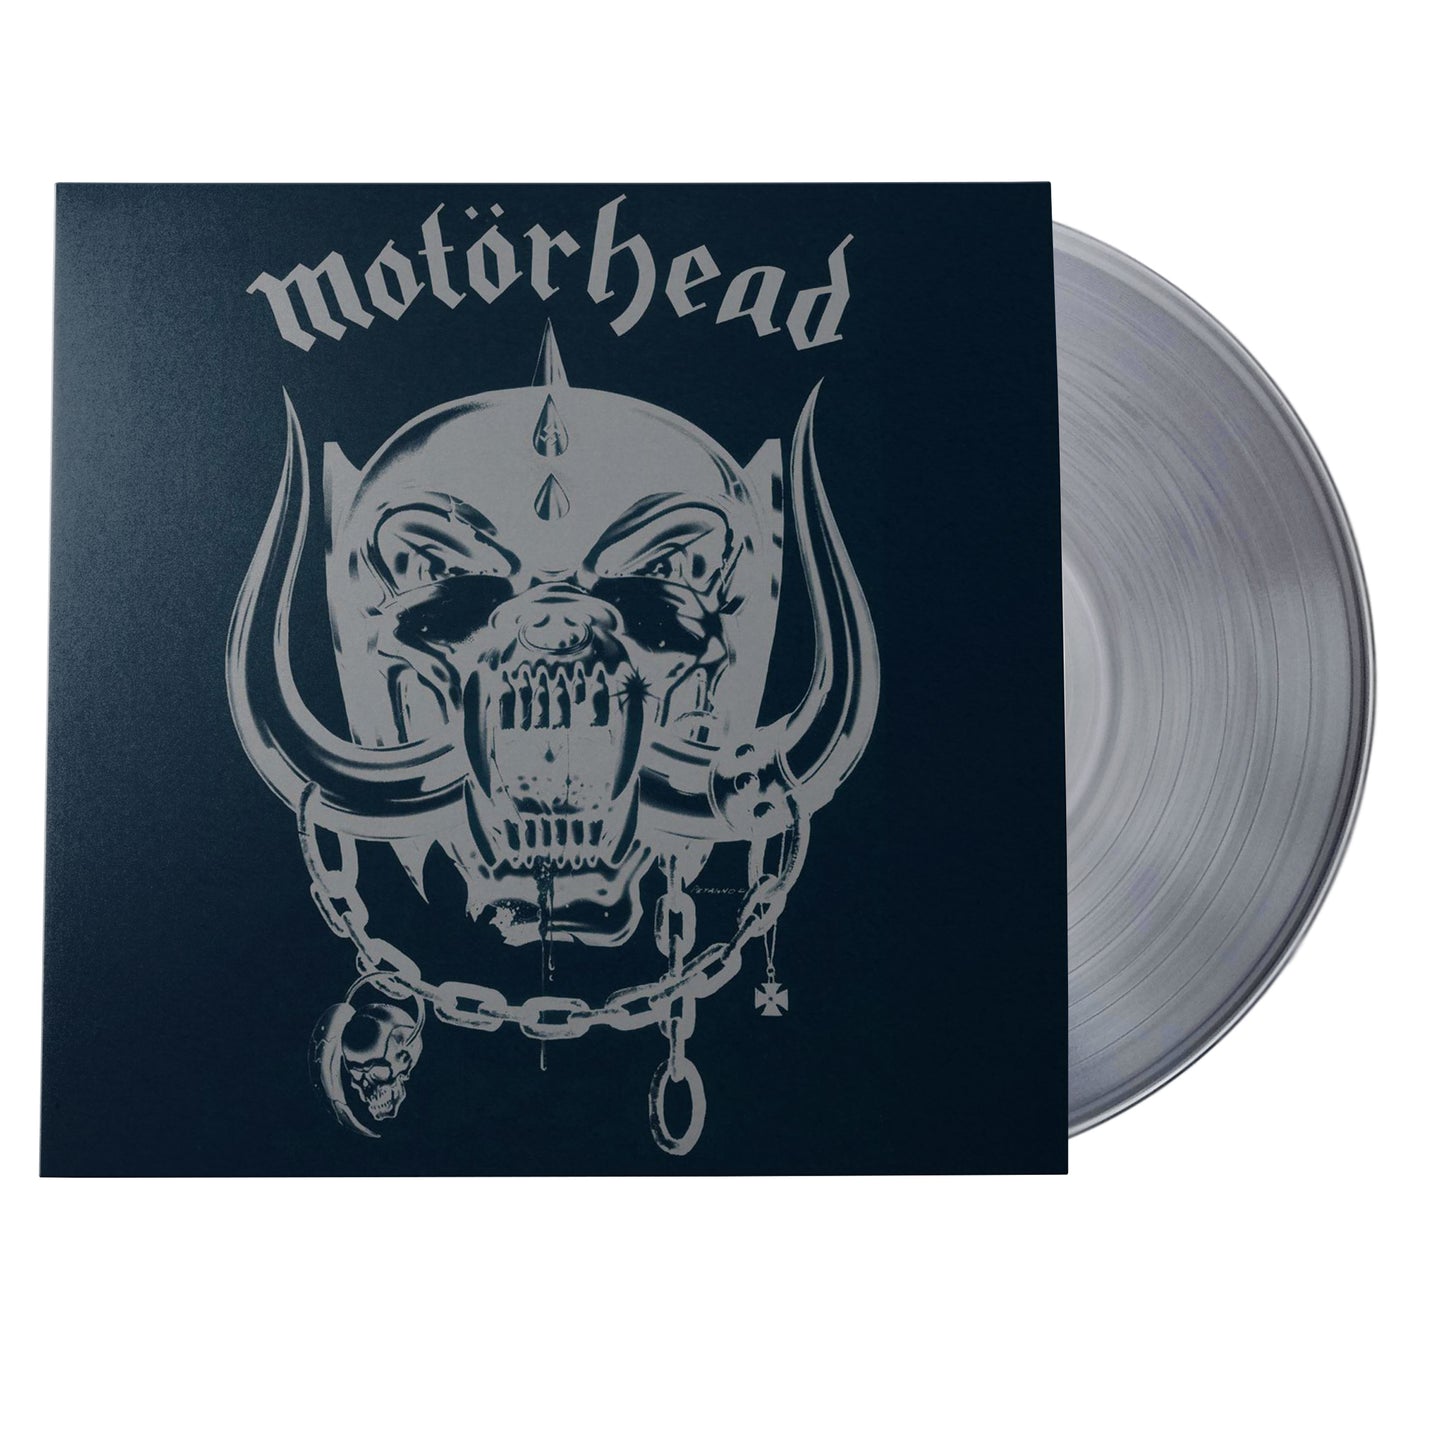 Motörhead (Exclusive | Limited Edition |Silver Vinyl)